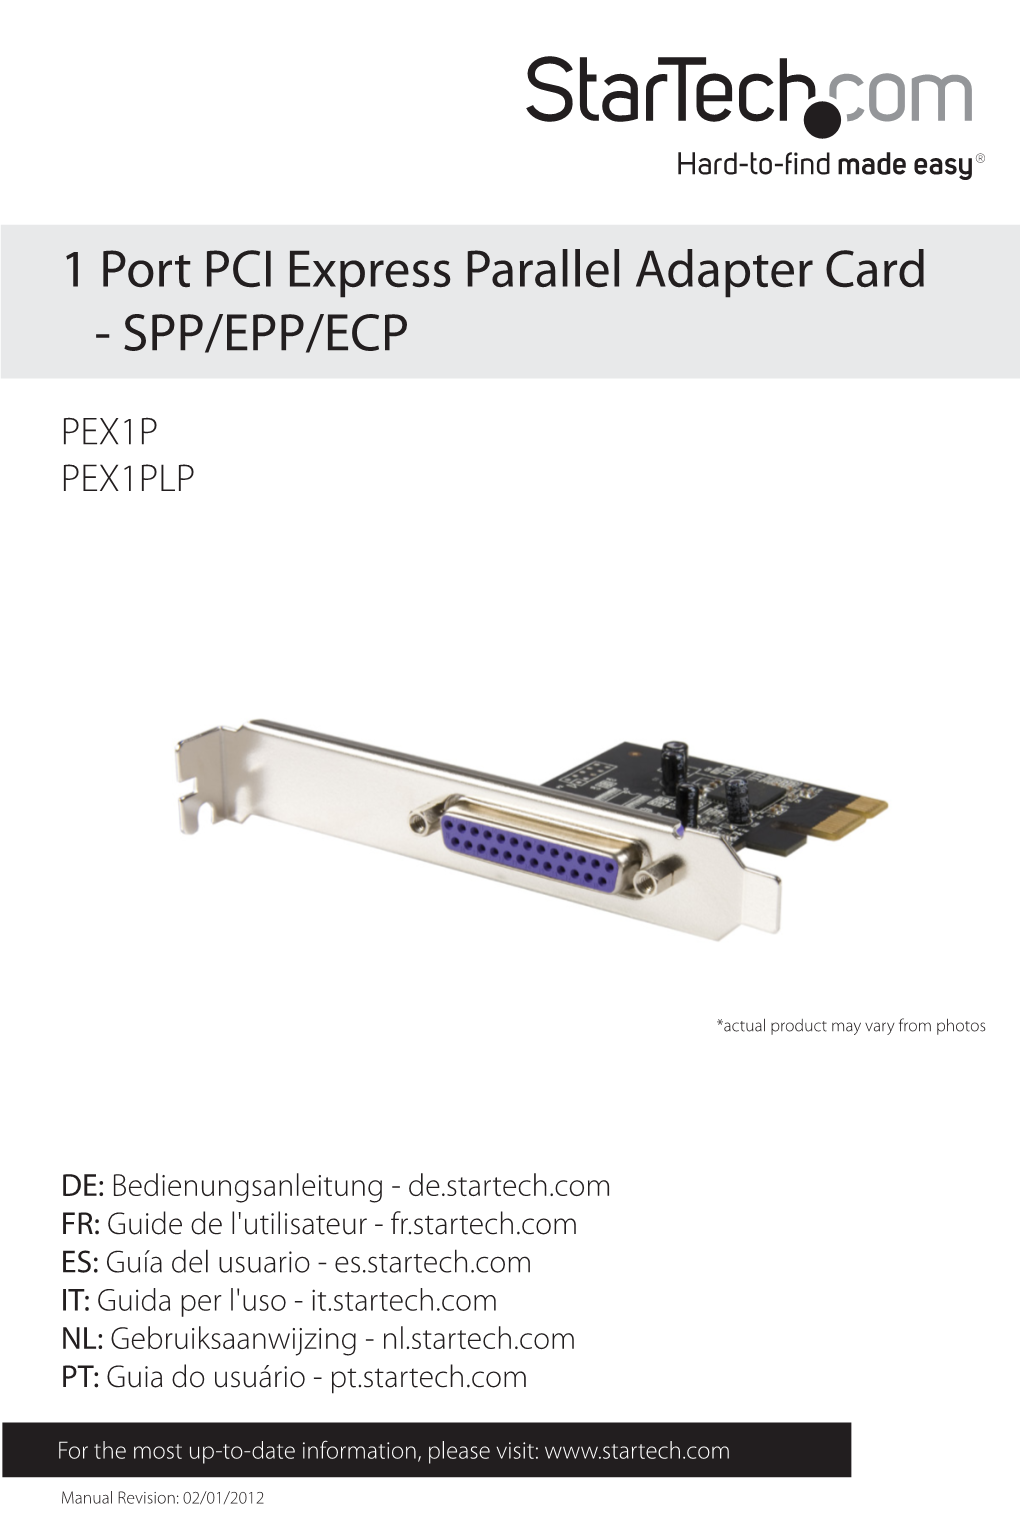 1 Port PCI Express Parallel Adapter Card - SPP/EPP/ECP